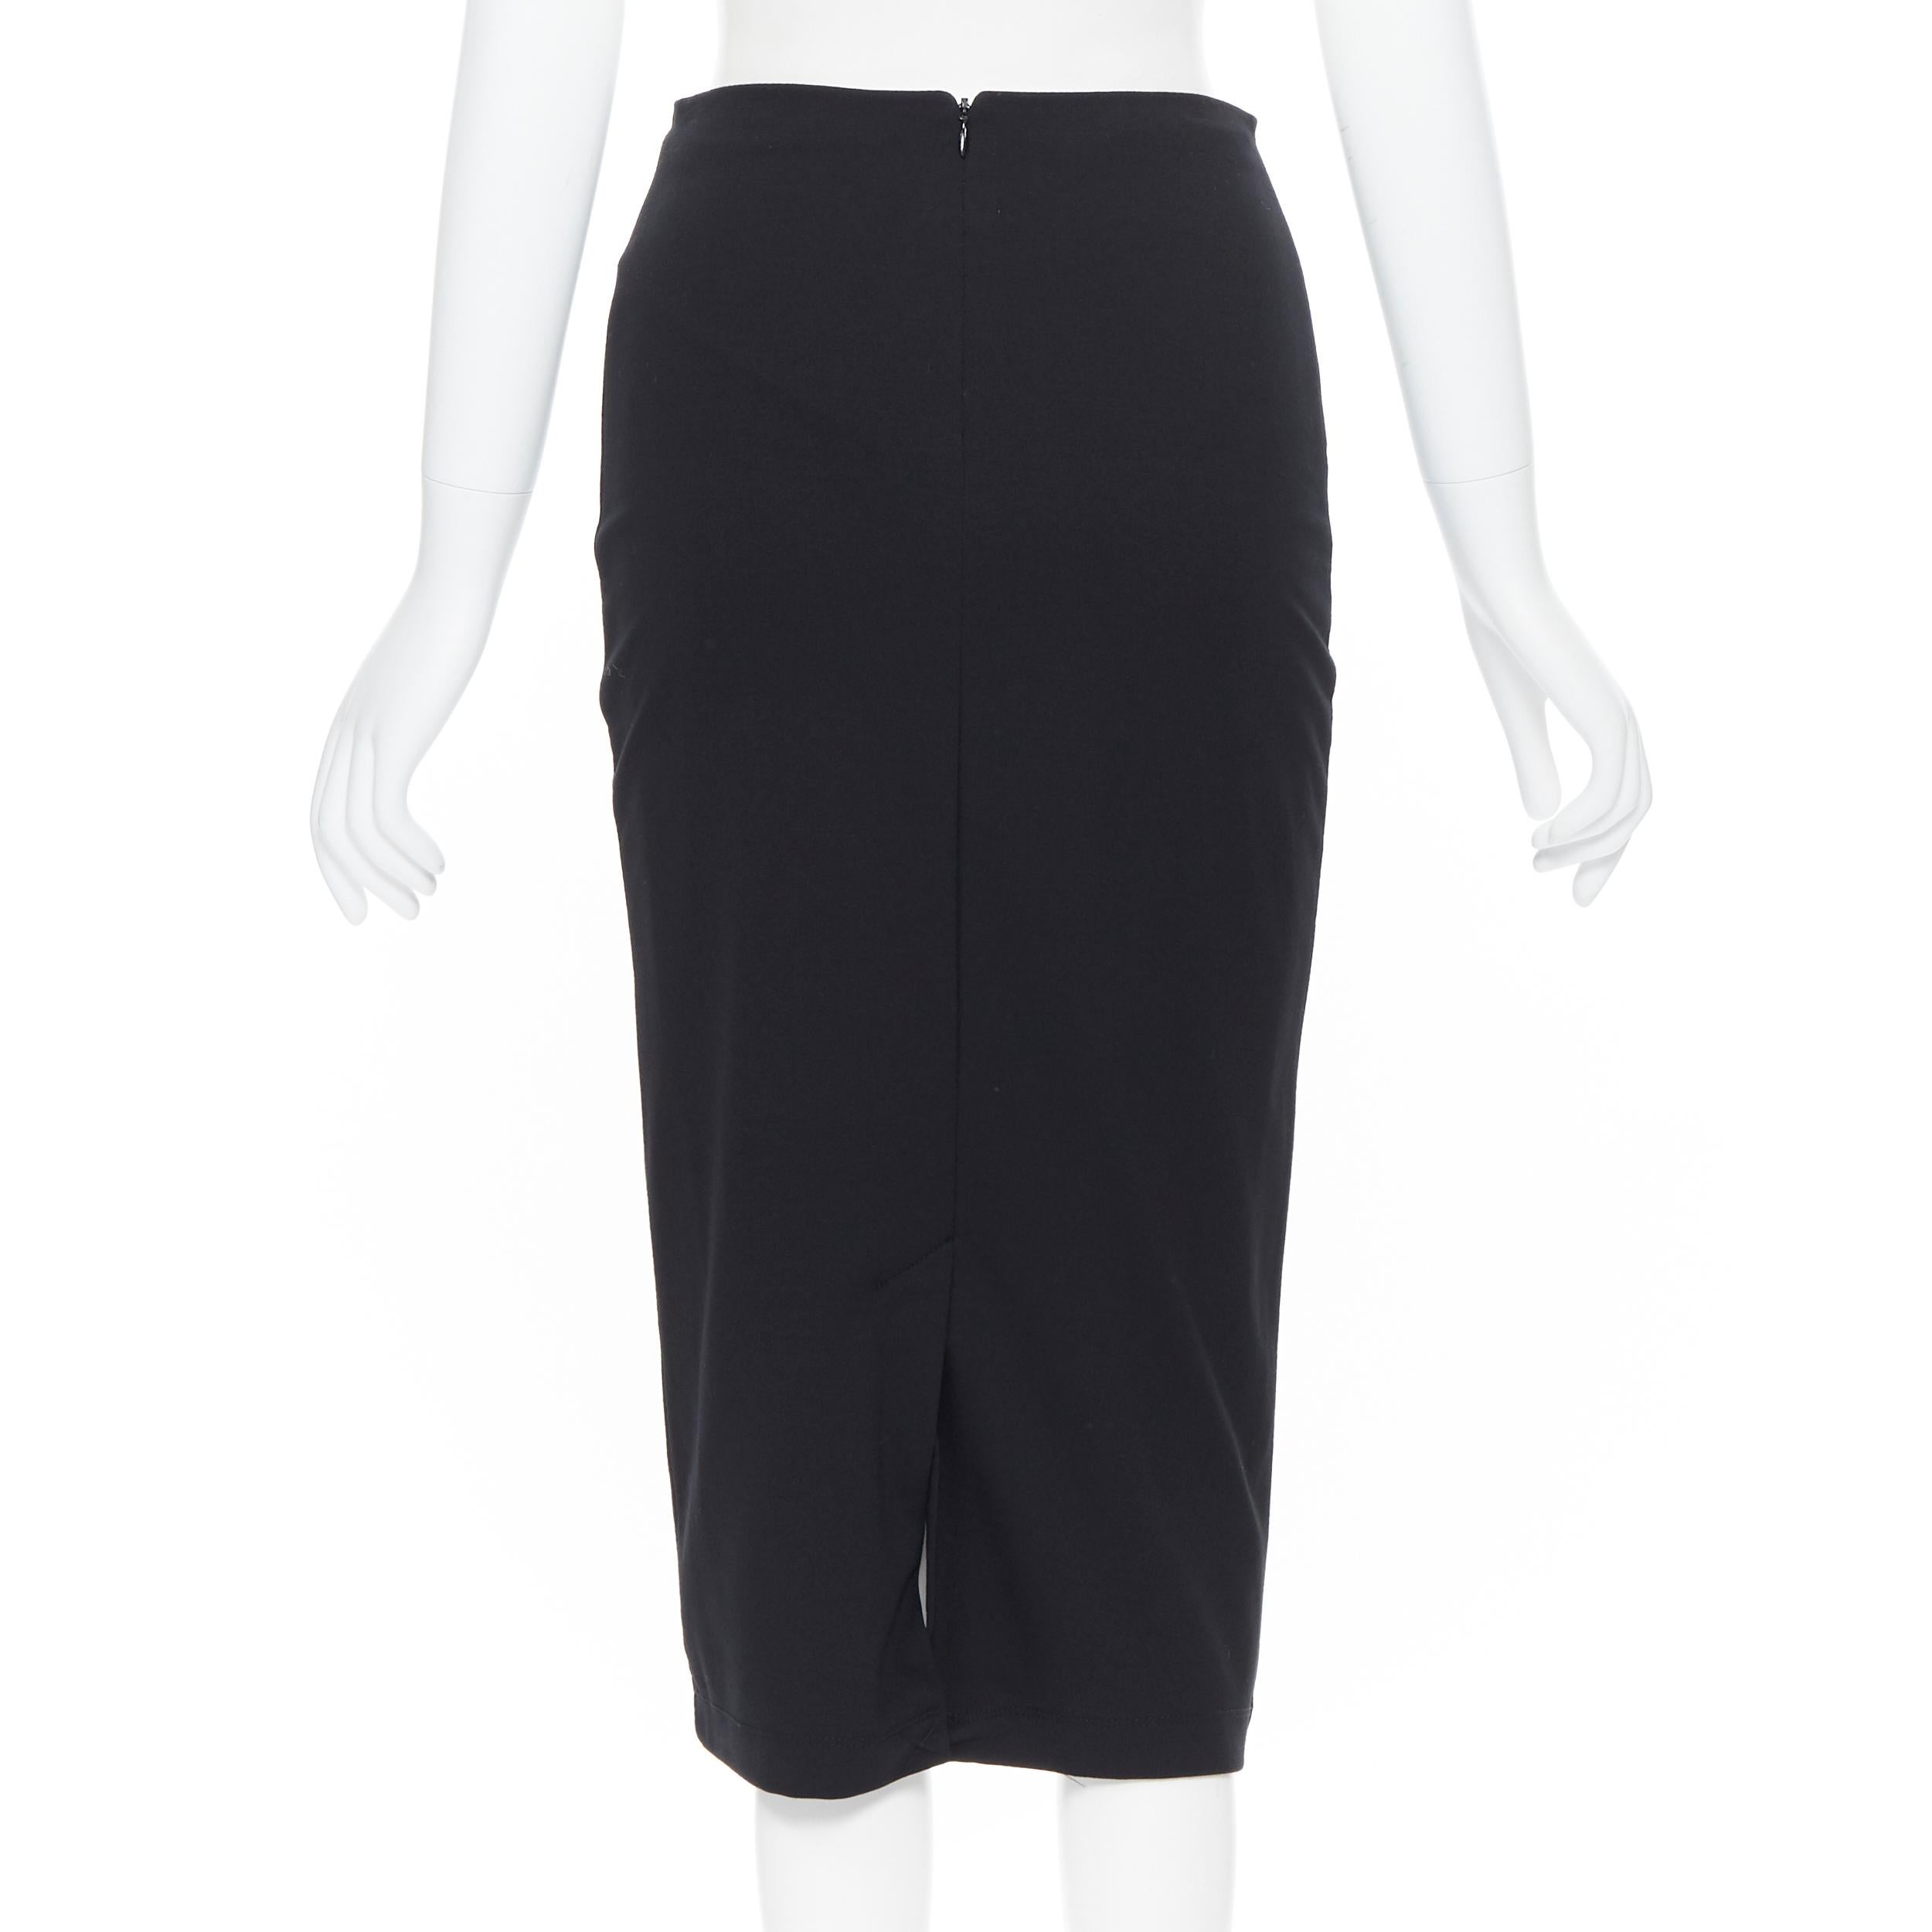 Black T BY ALEXANDER WANG black rayon polyester center slit stretch pencil skirt S